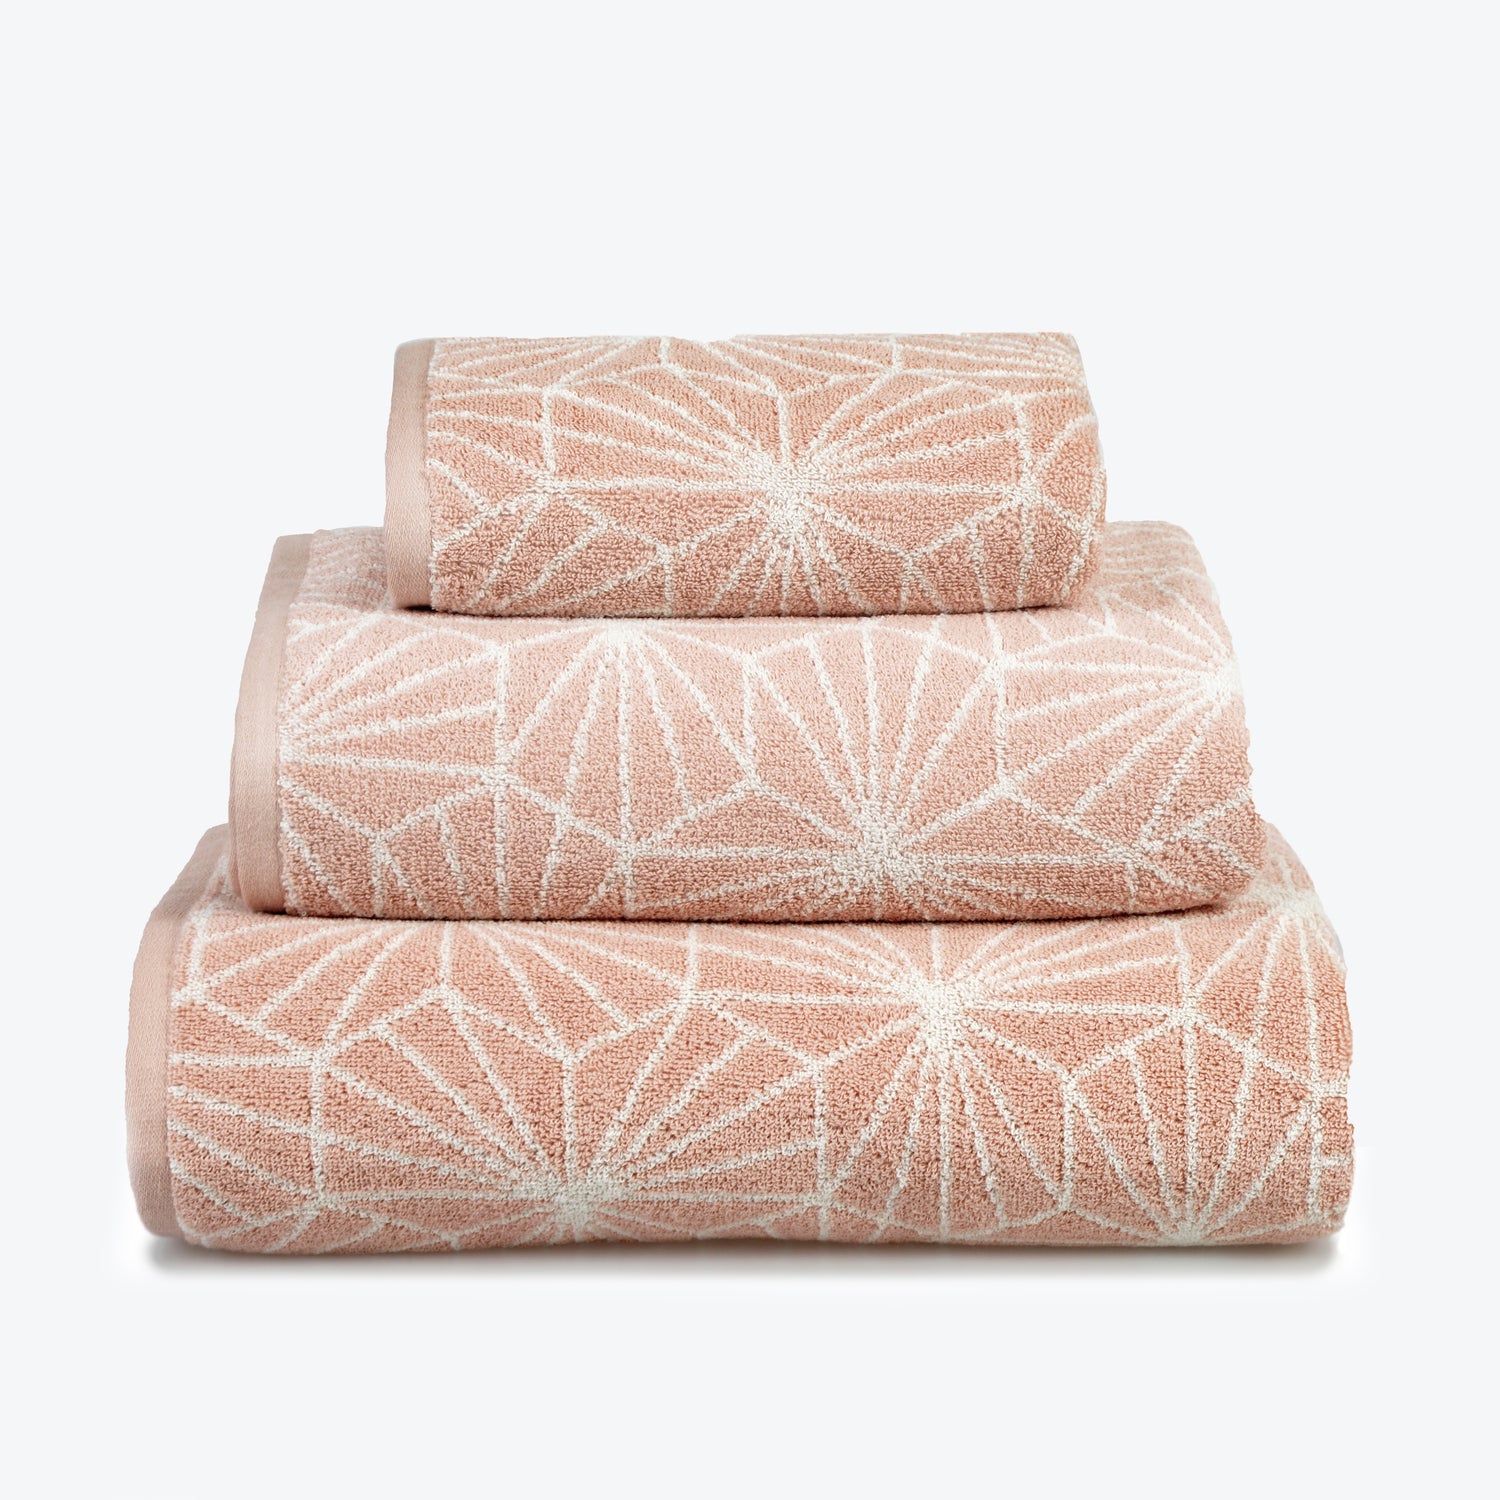 Blush Pink Geometric Towel Bale - Co-ordinated Patterned Bathroom Towels